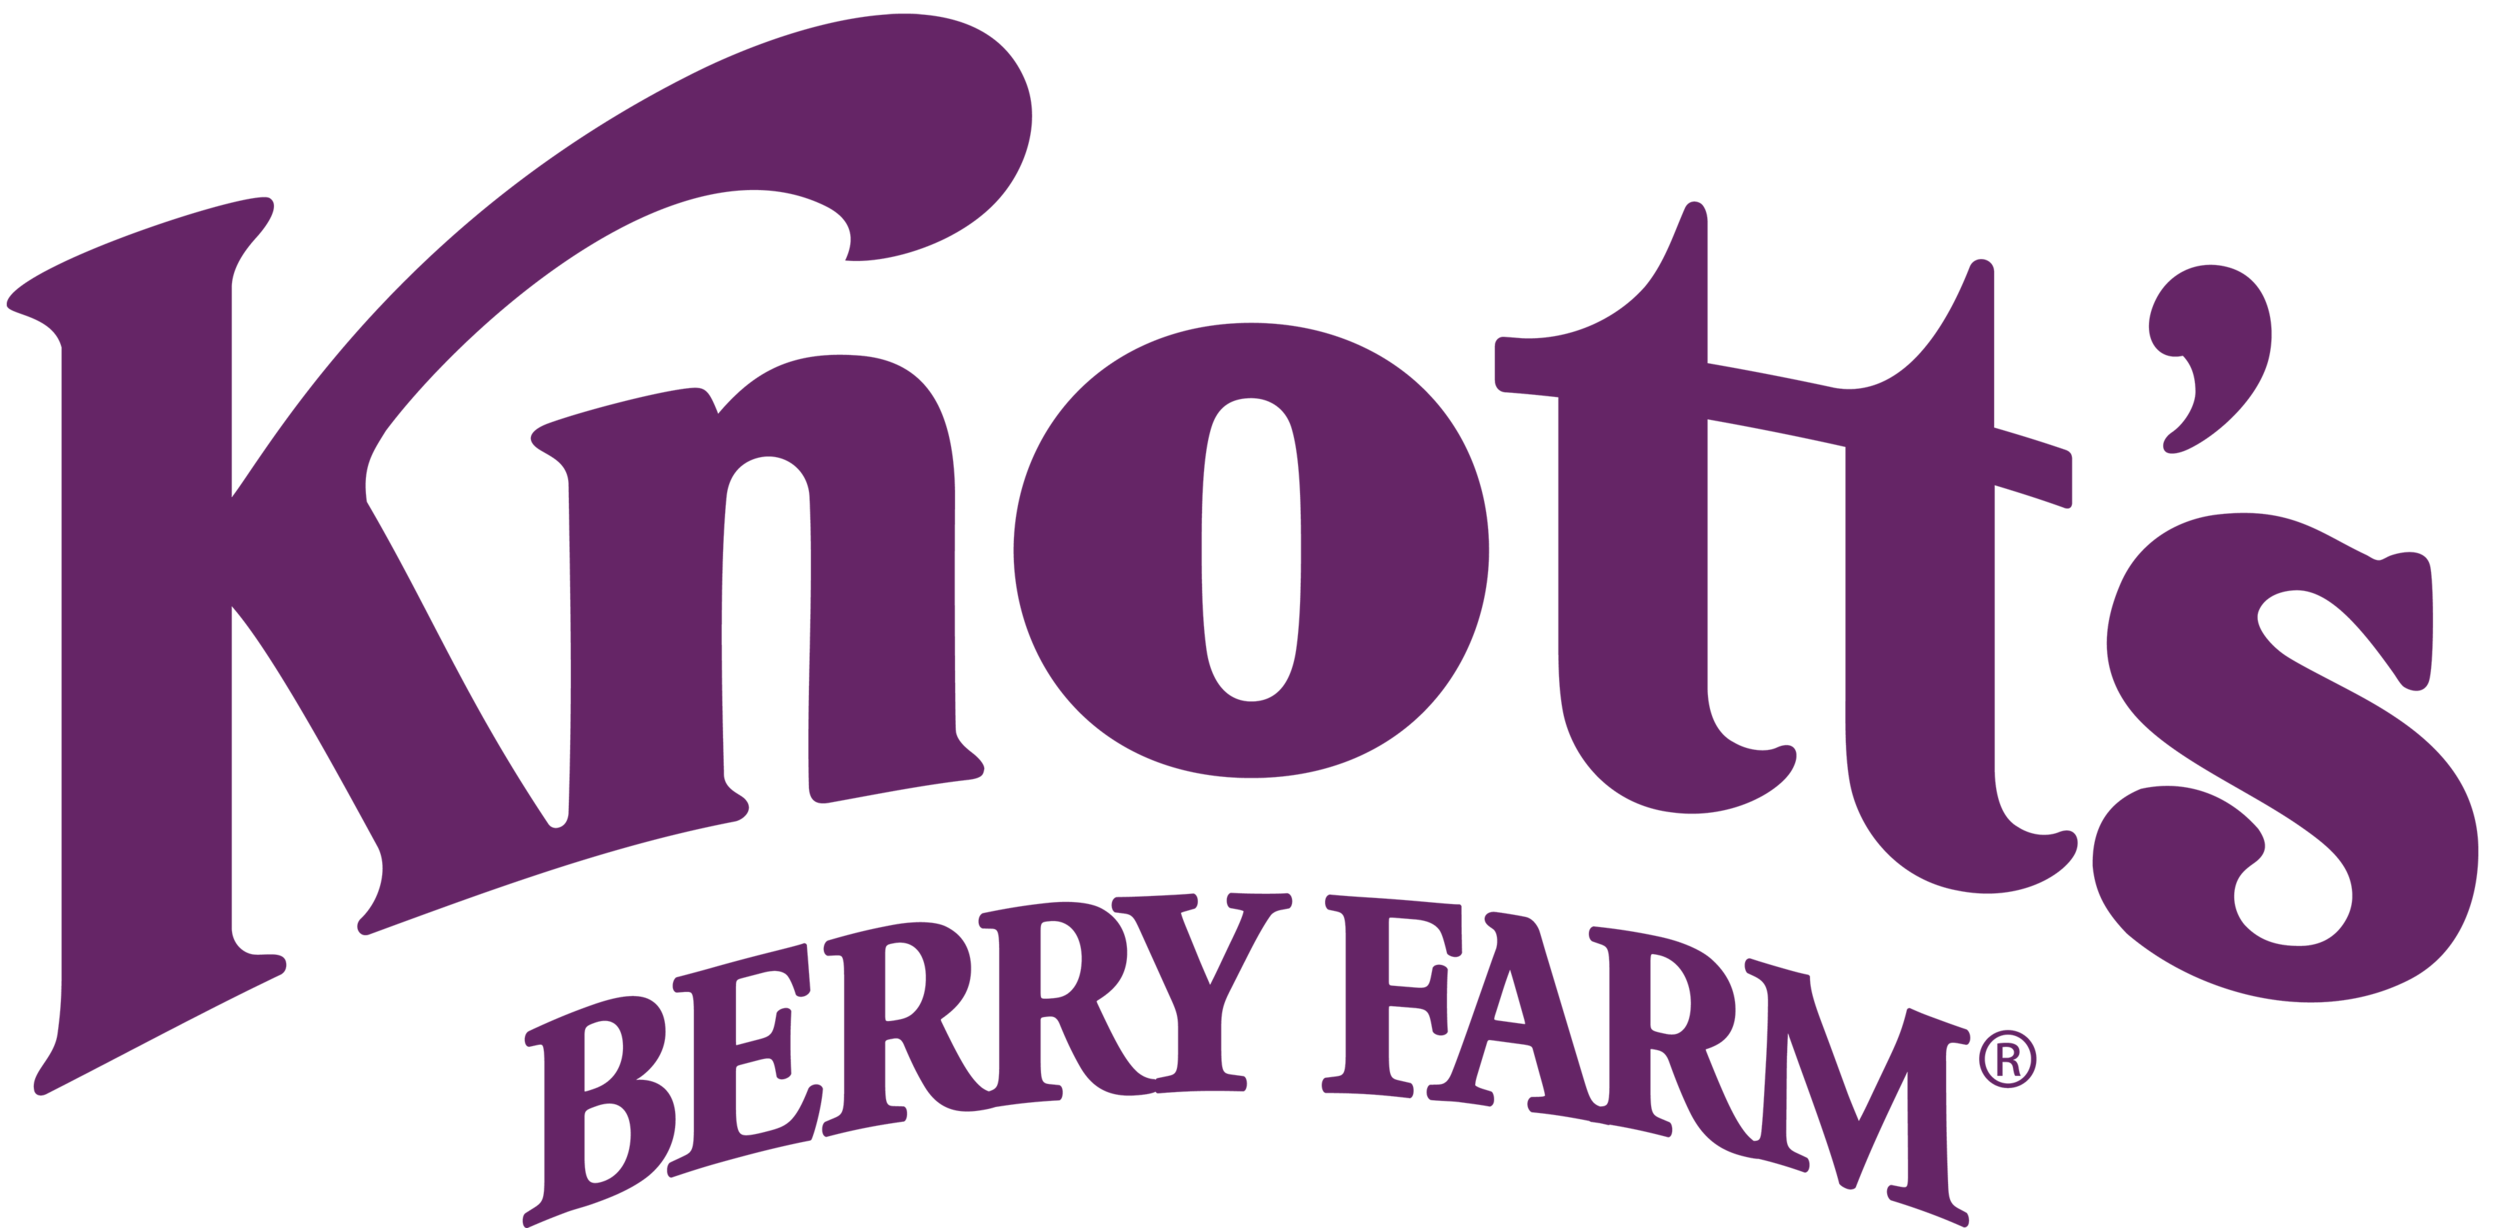 knotts-berry-farm-purple-logo.png